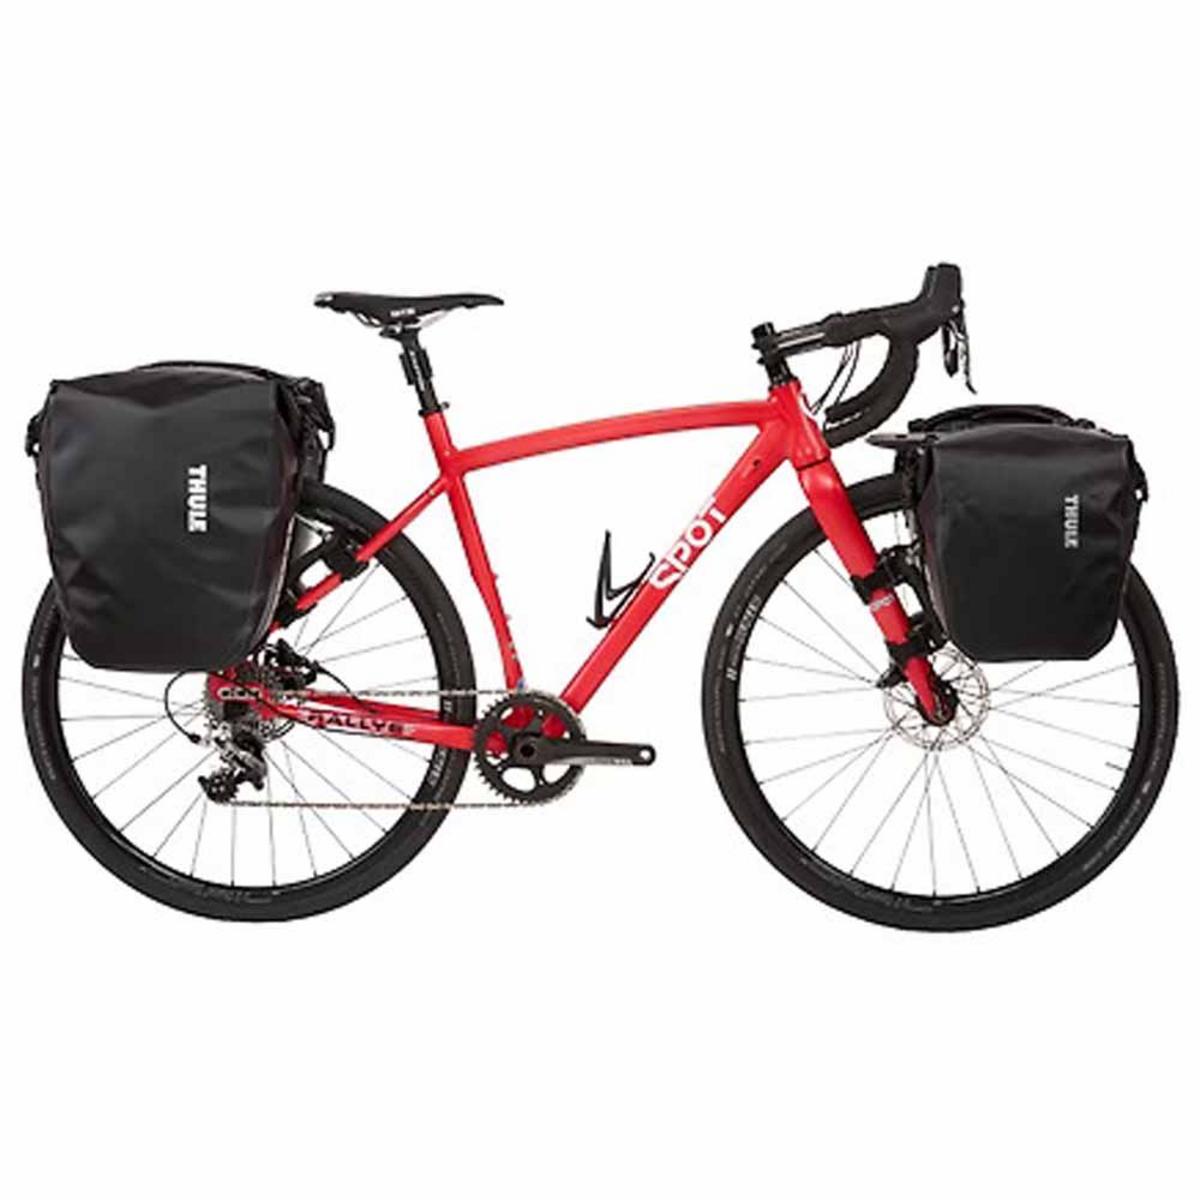 Thule Shield Pannier 25L Pair Bike Bag - Black